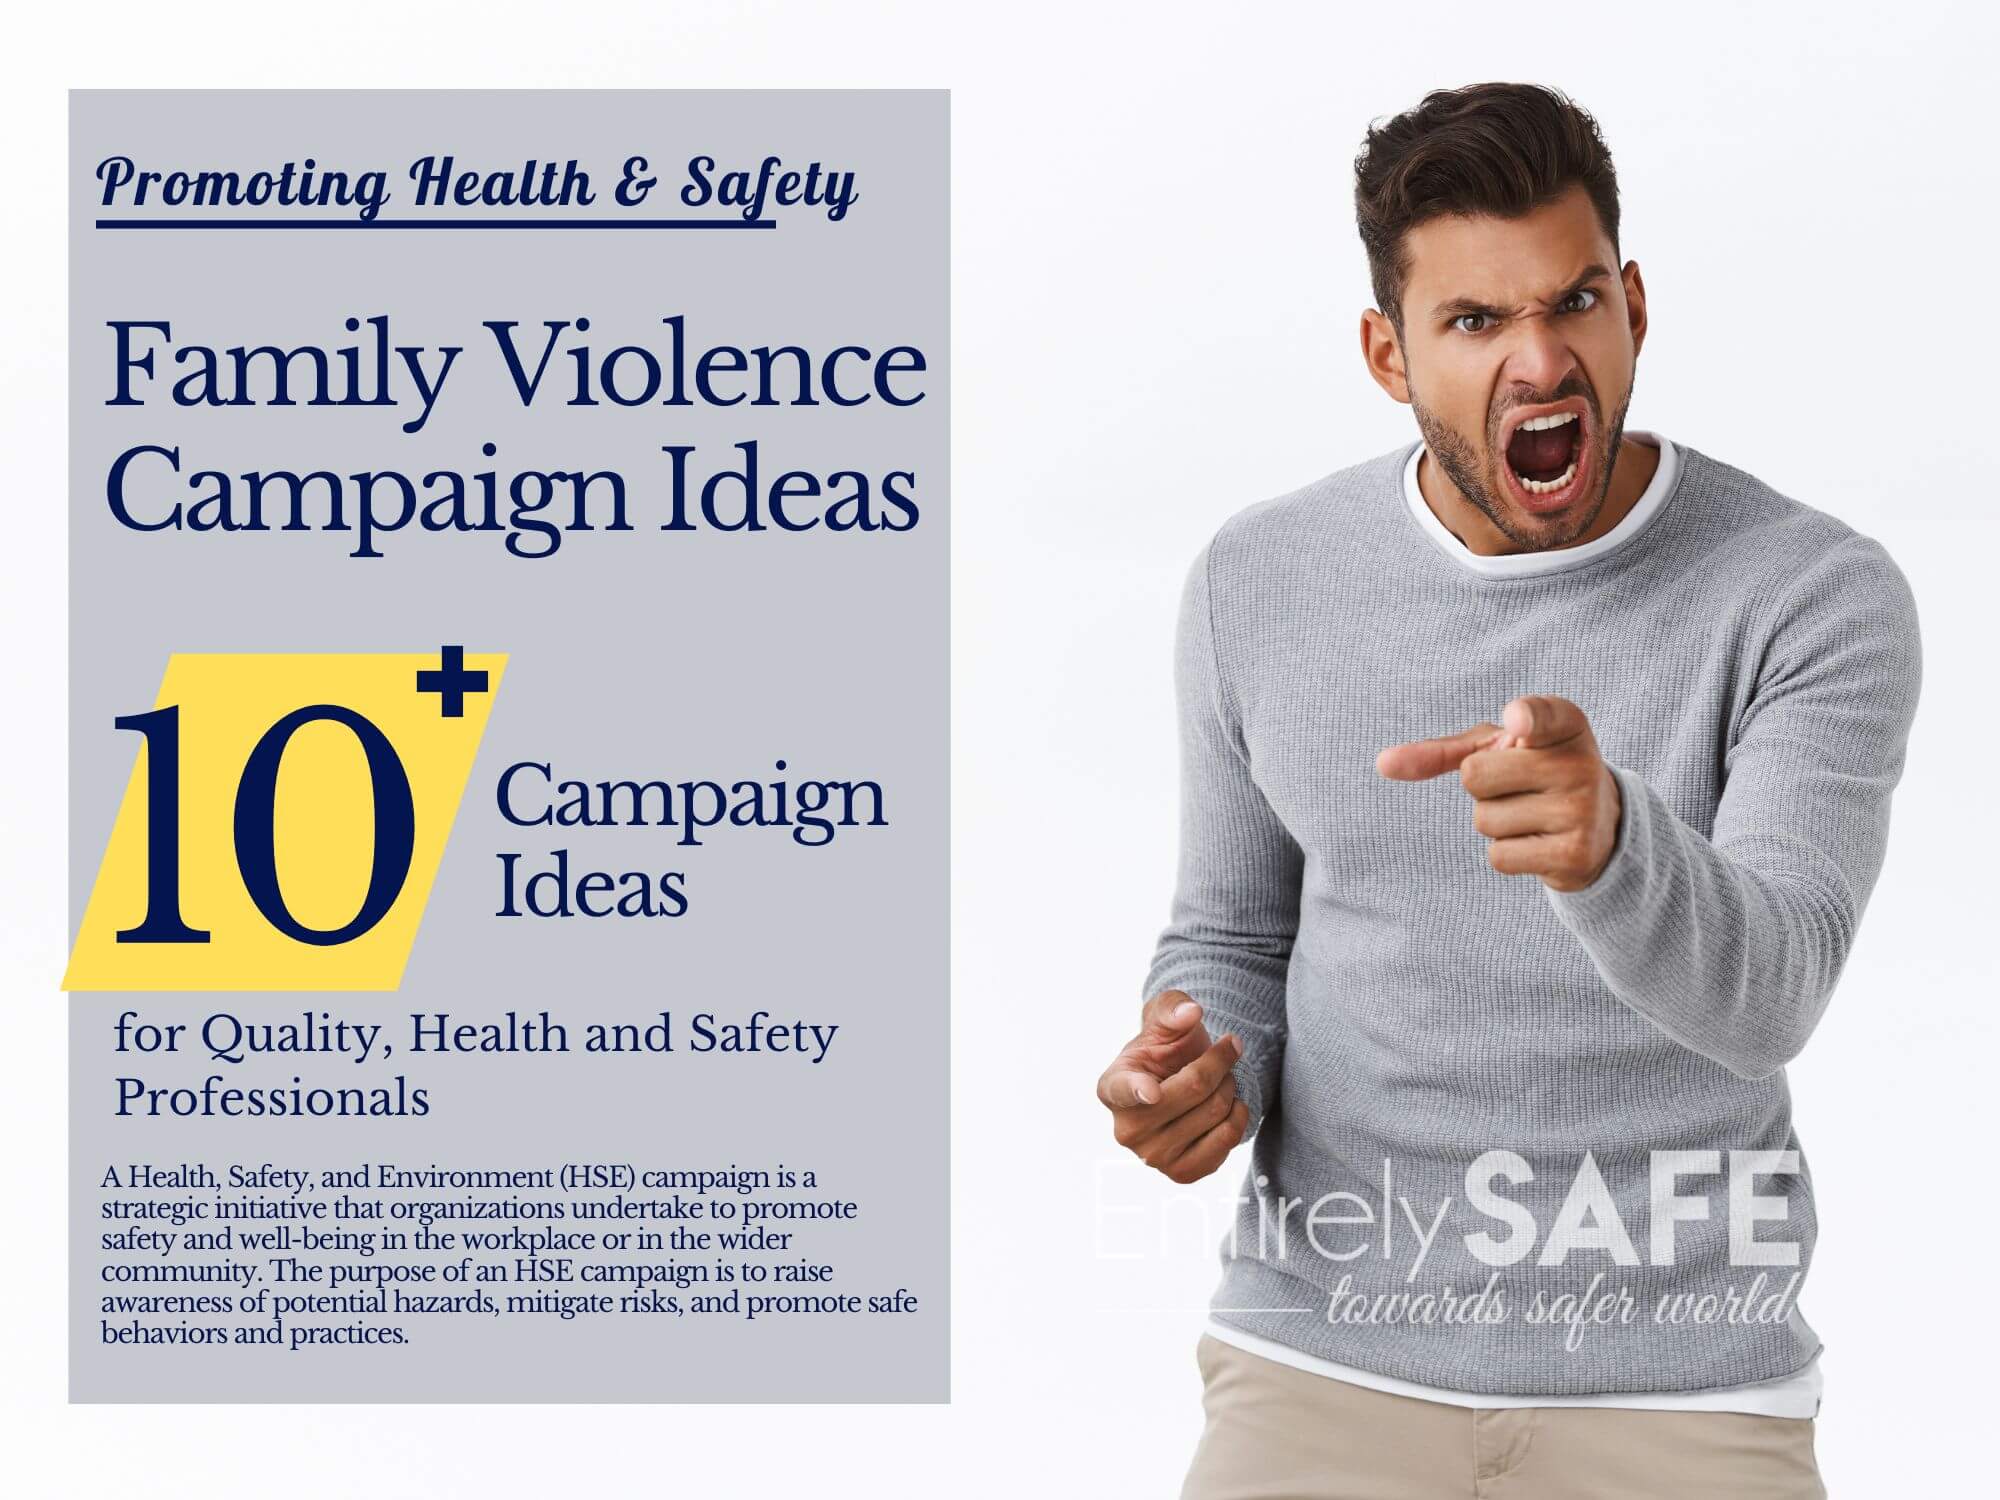 Family Violence Awareness Campaign Ideas